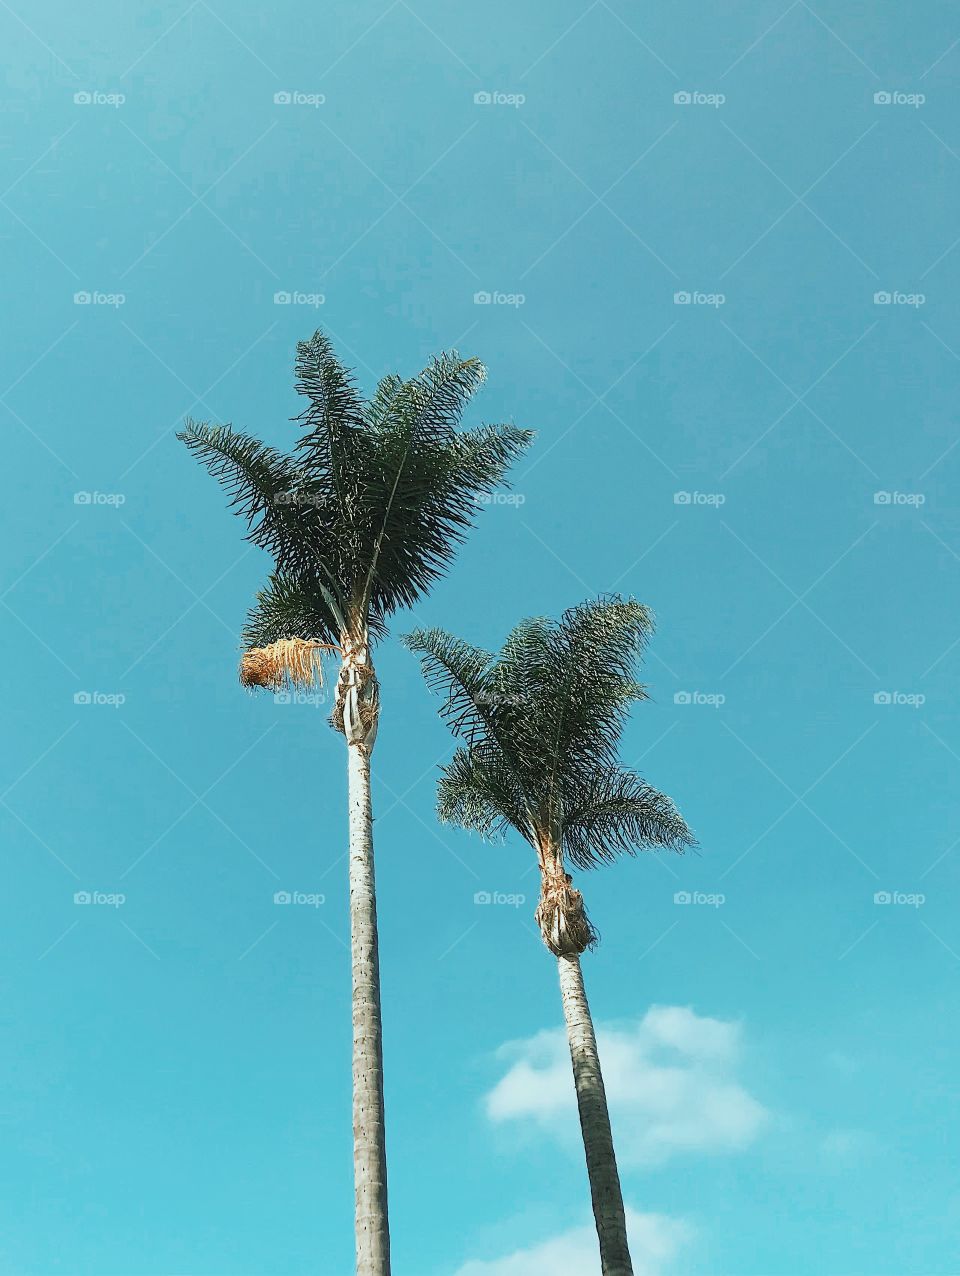 Palm trees against a blue sky. 